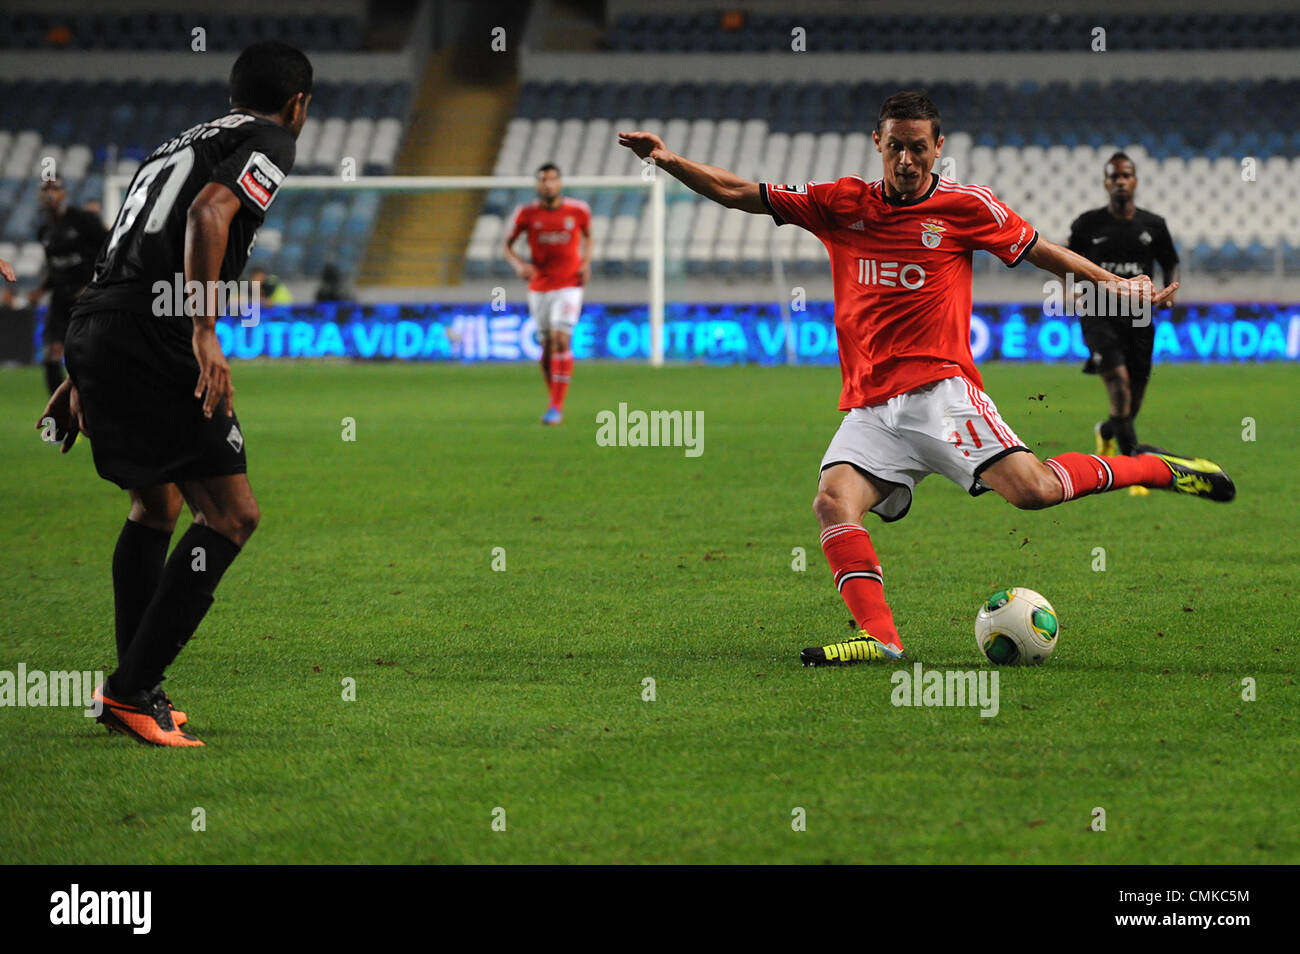 Sport Lisboa e Benfica Serbian midfielder Nemanja Matic shoots on goal during a Portuguese football league match against Academica de Coimbra Stock Photo